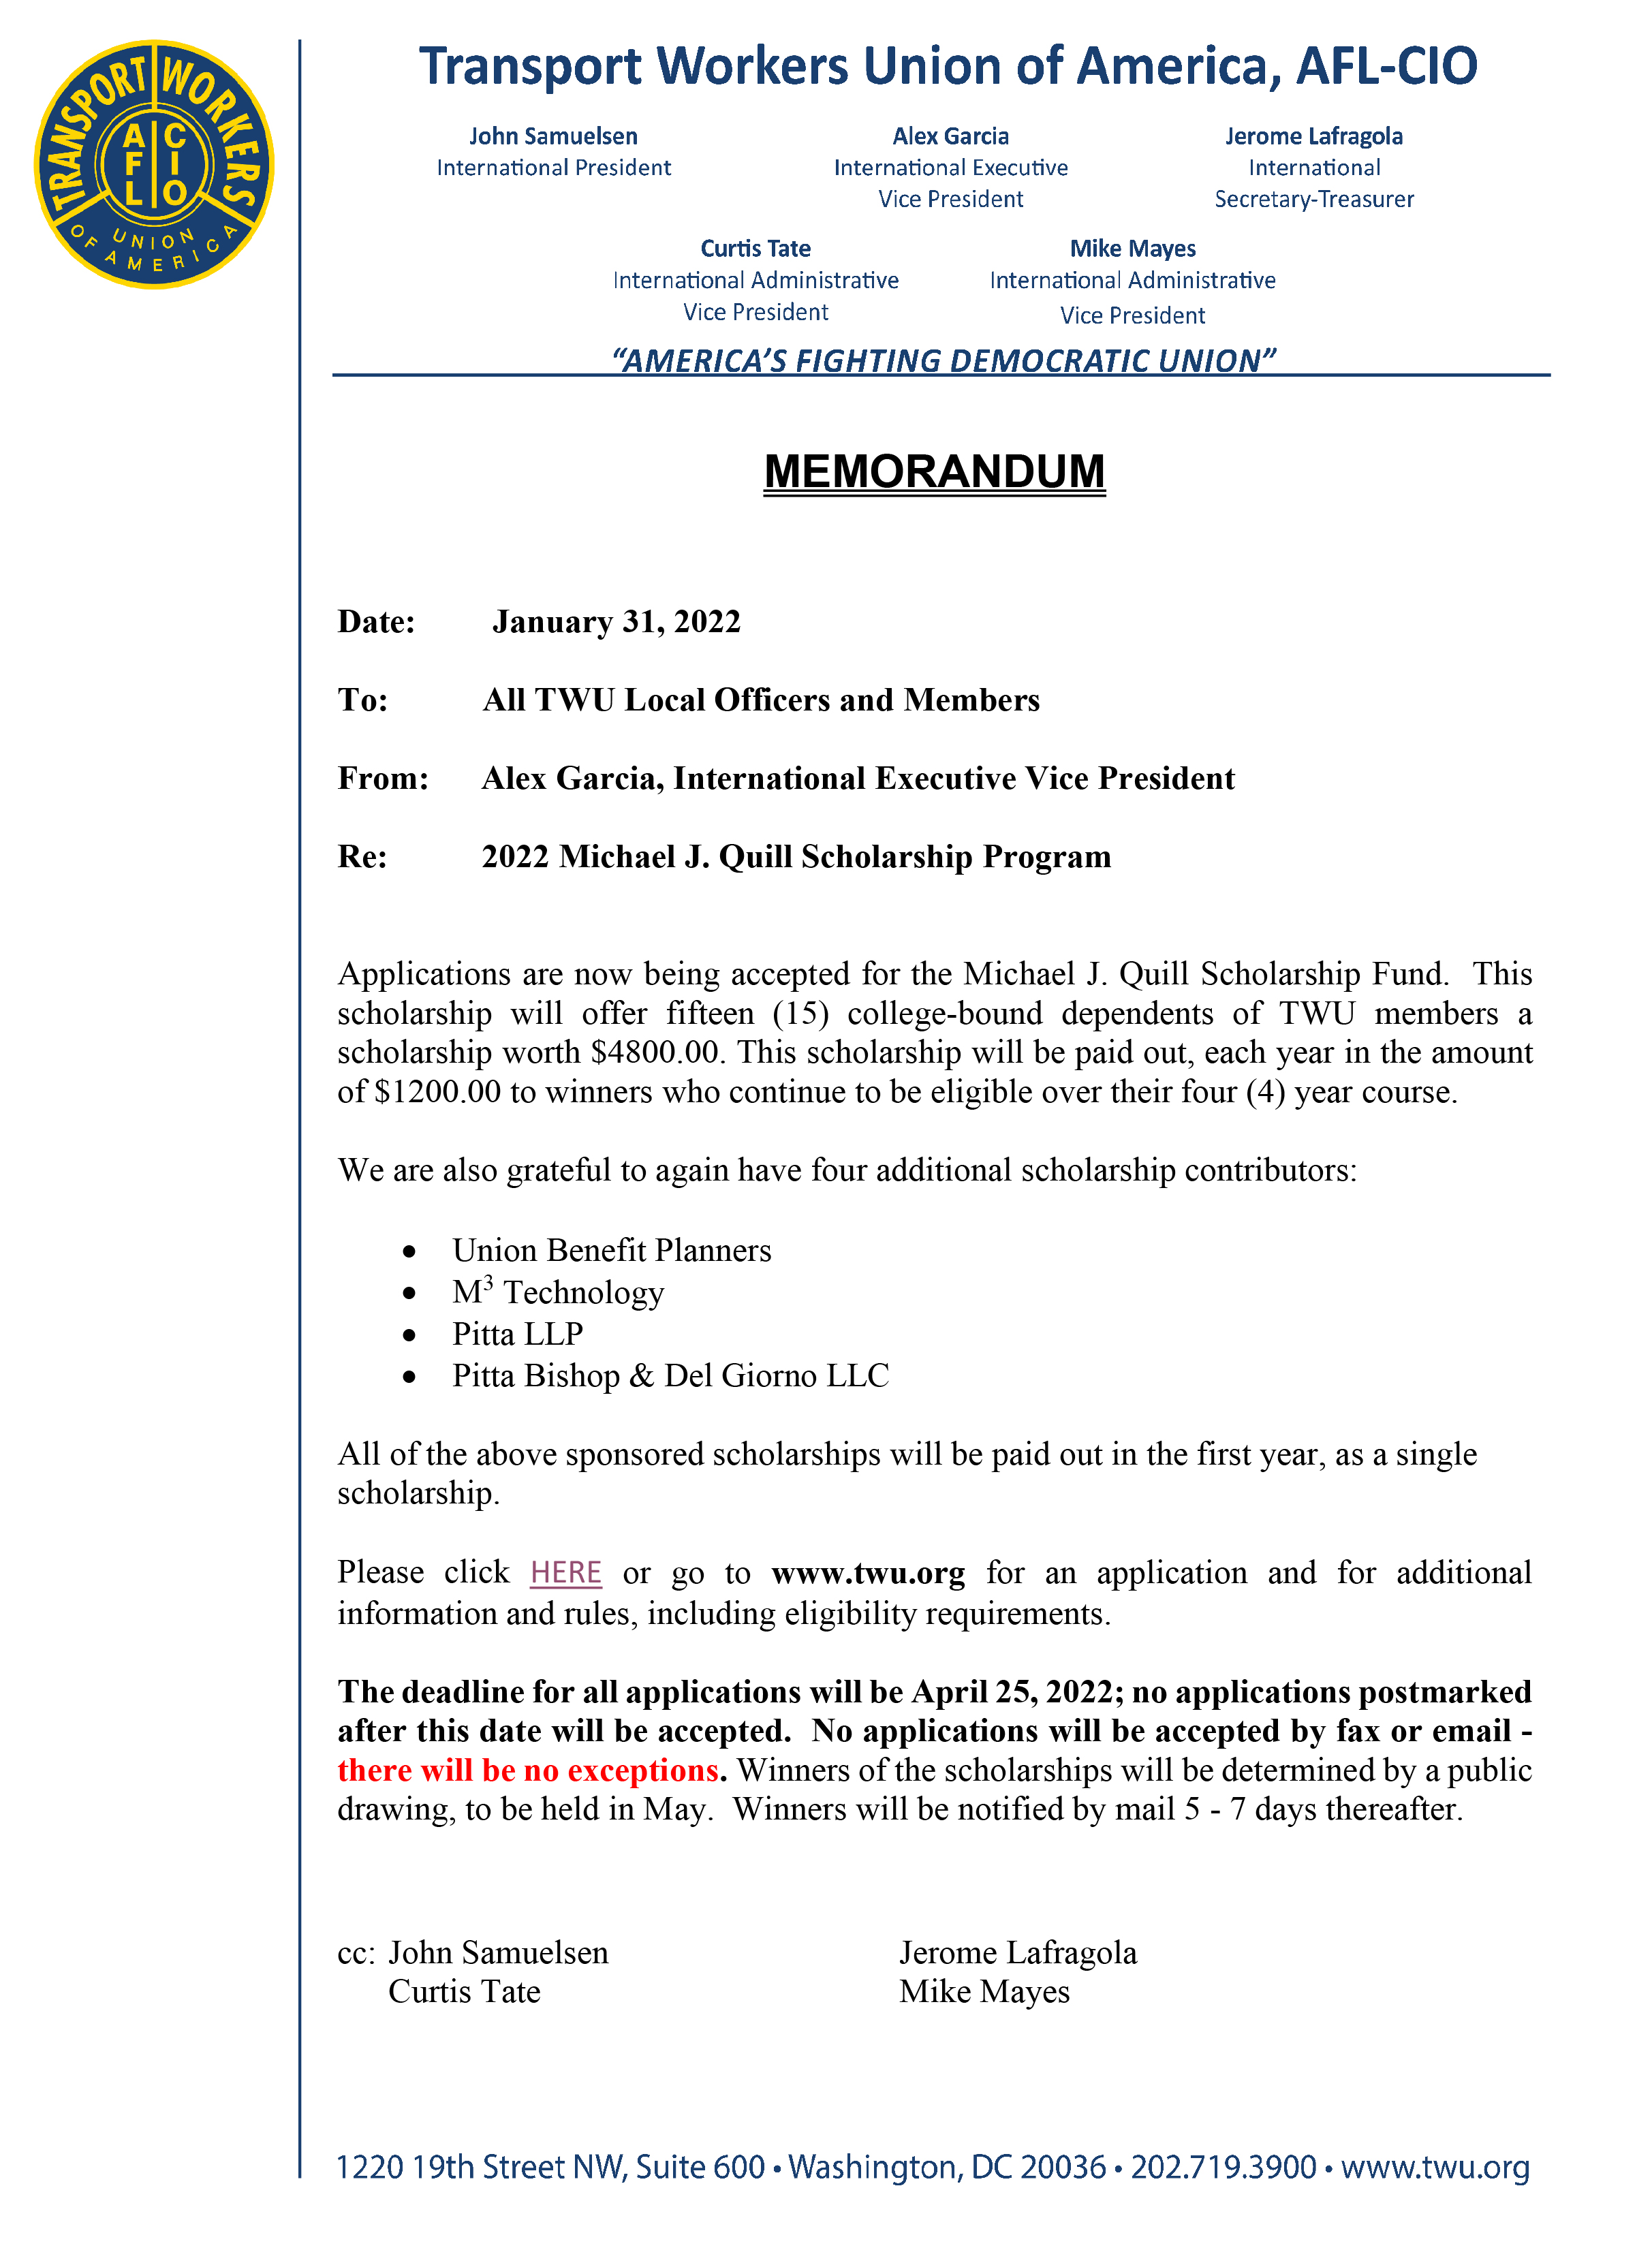 2022 Michael J Quill Scholarship Program